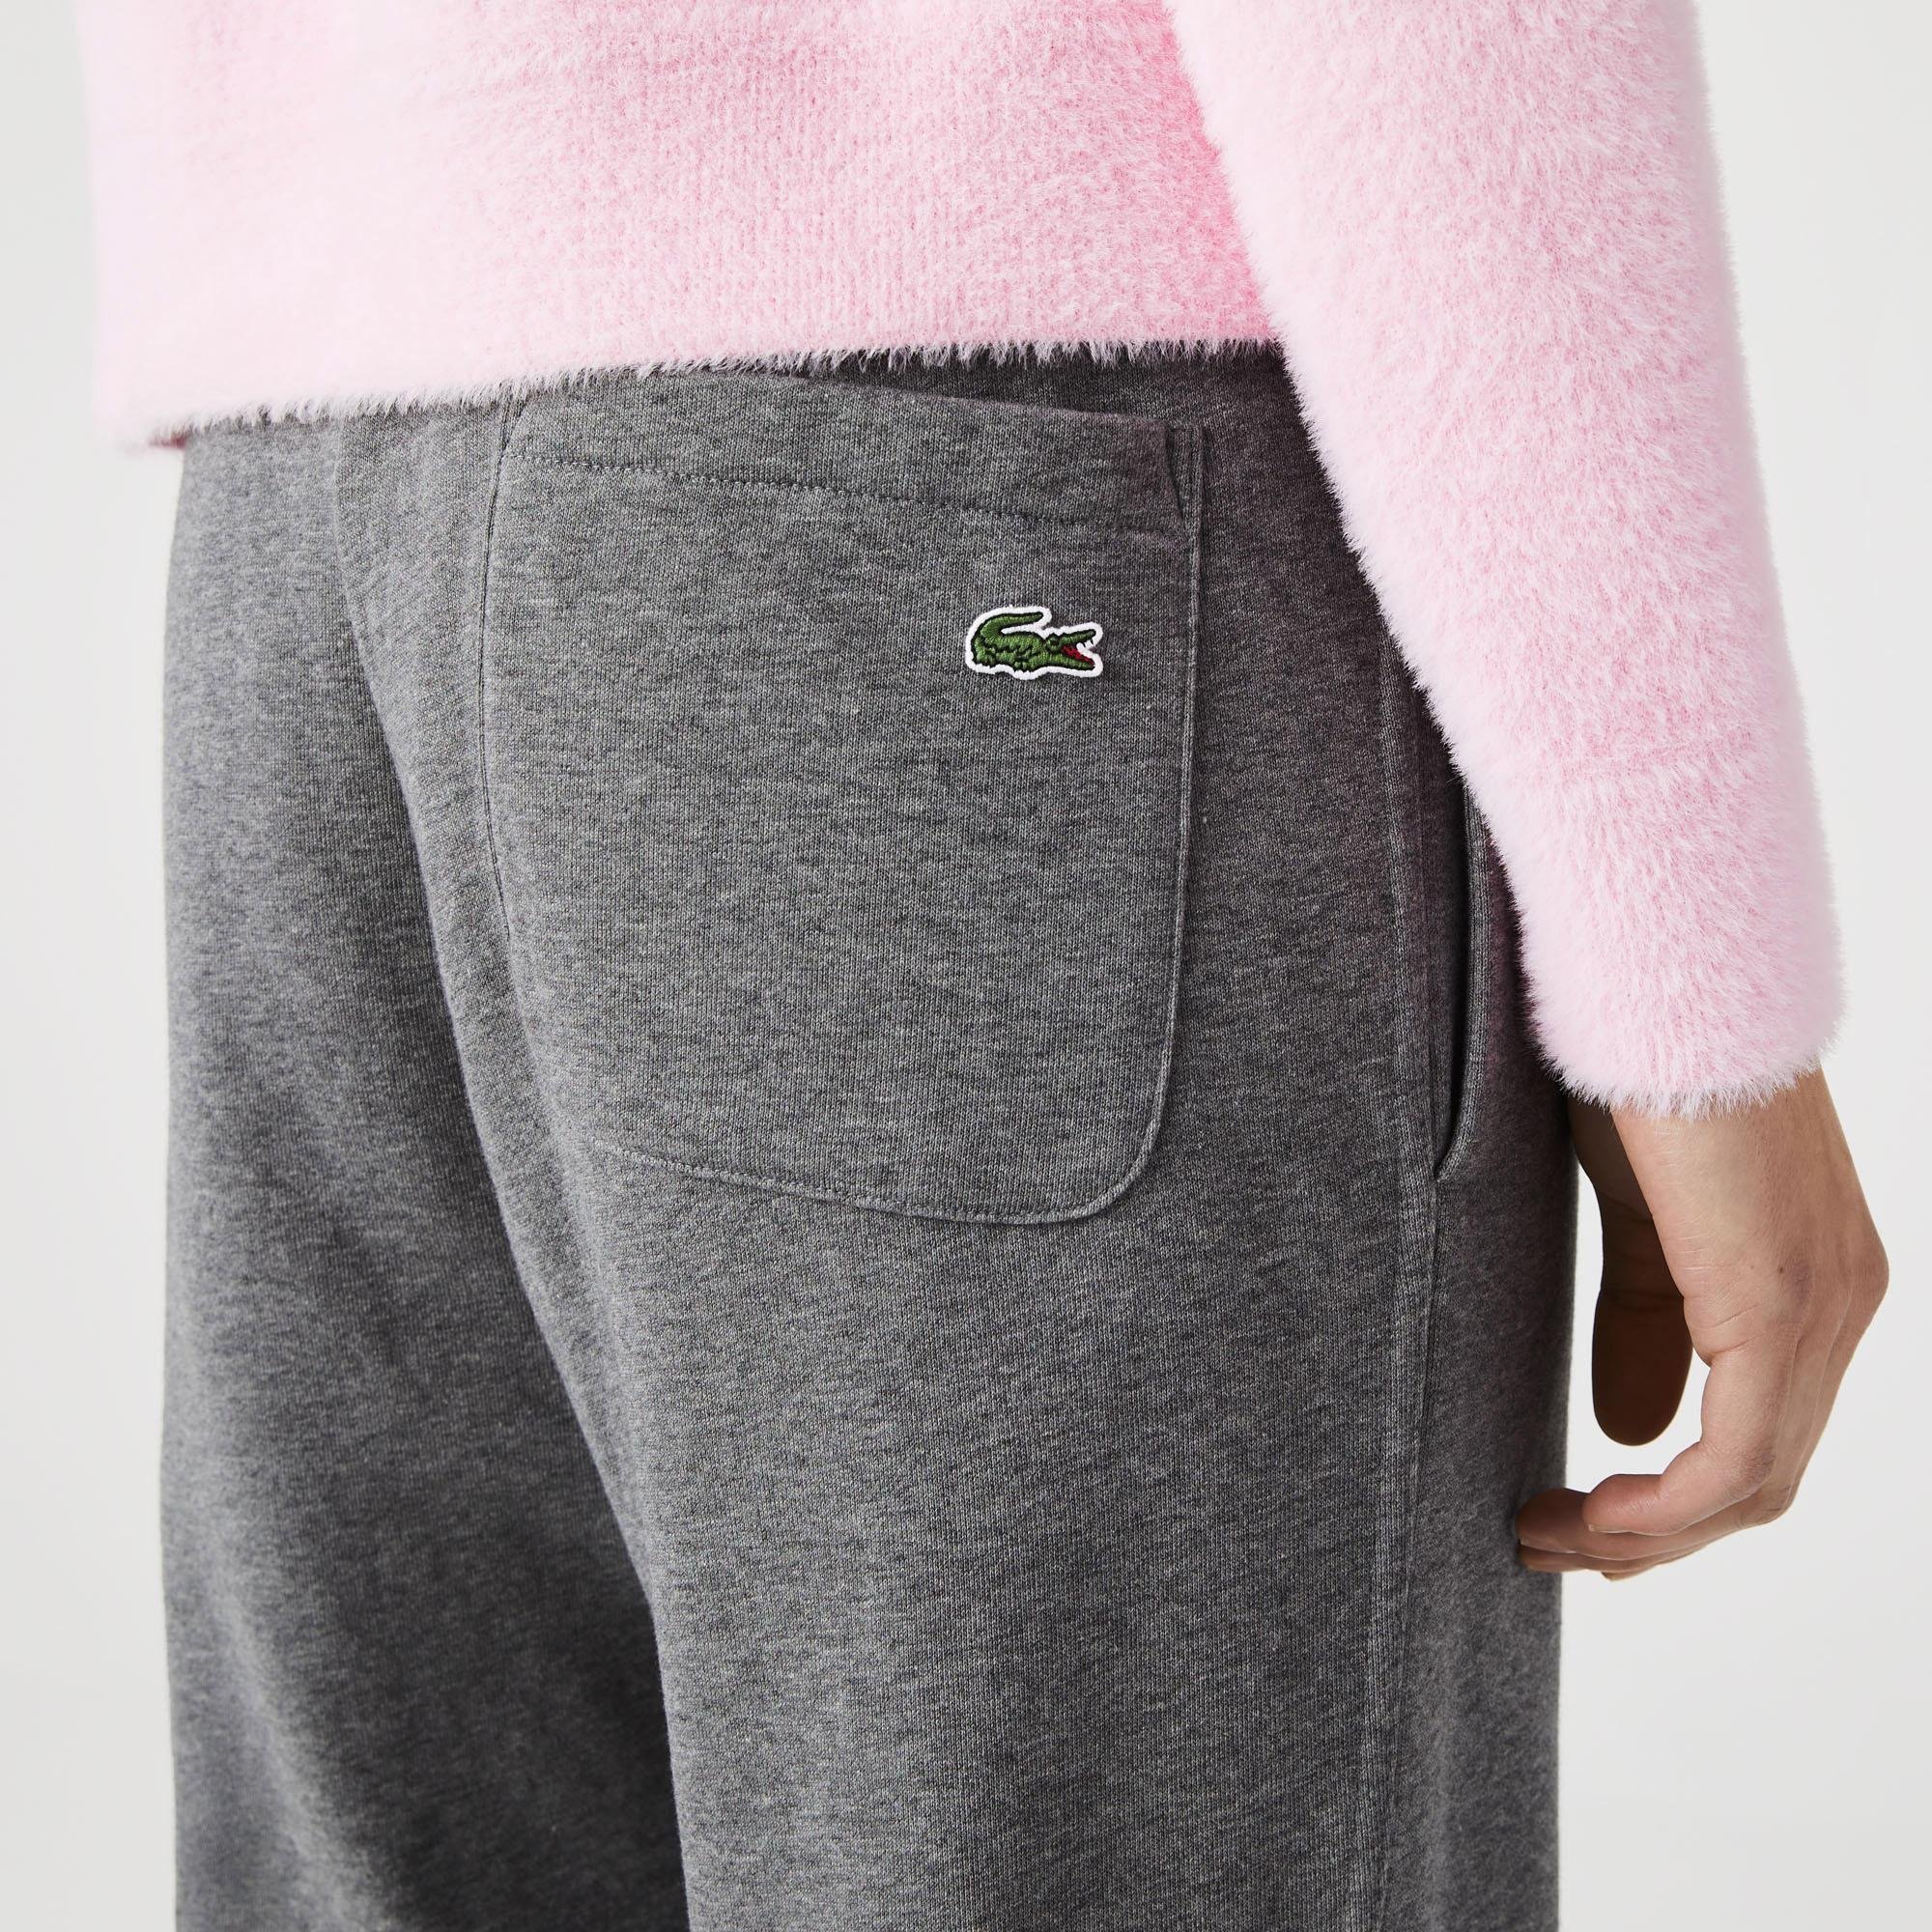 Lacoste Women's Lightweight Printed Fleece Jogging Pants